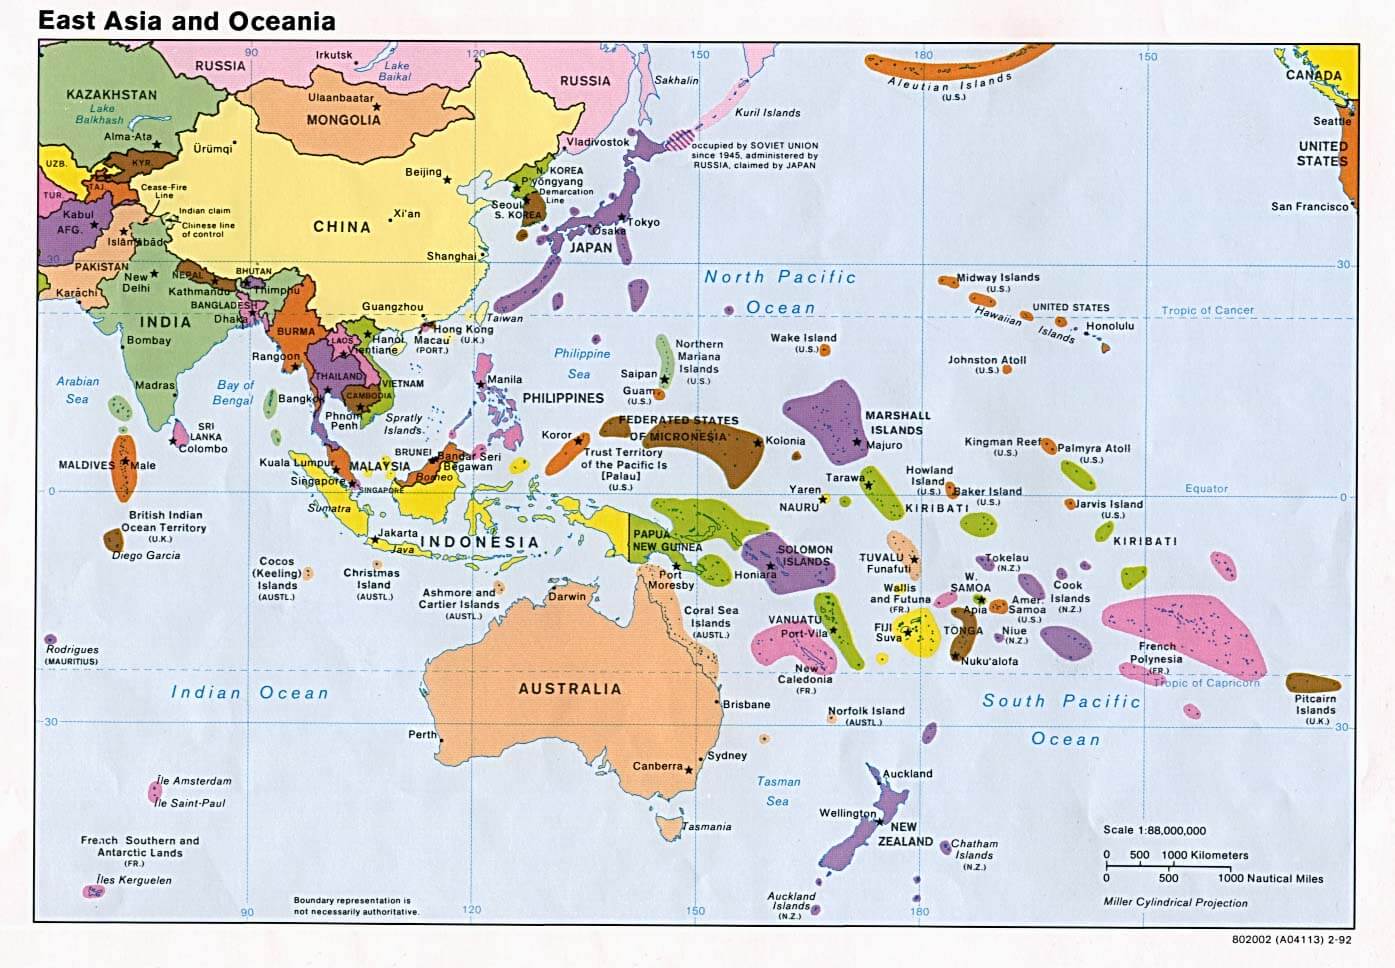 east asia oceania political 1992